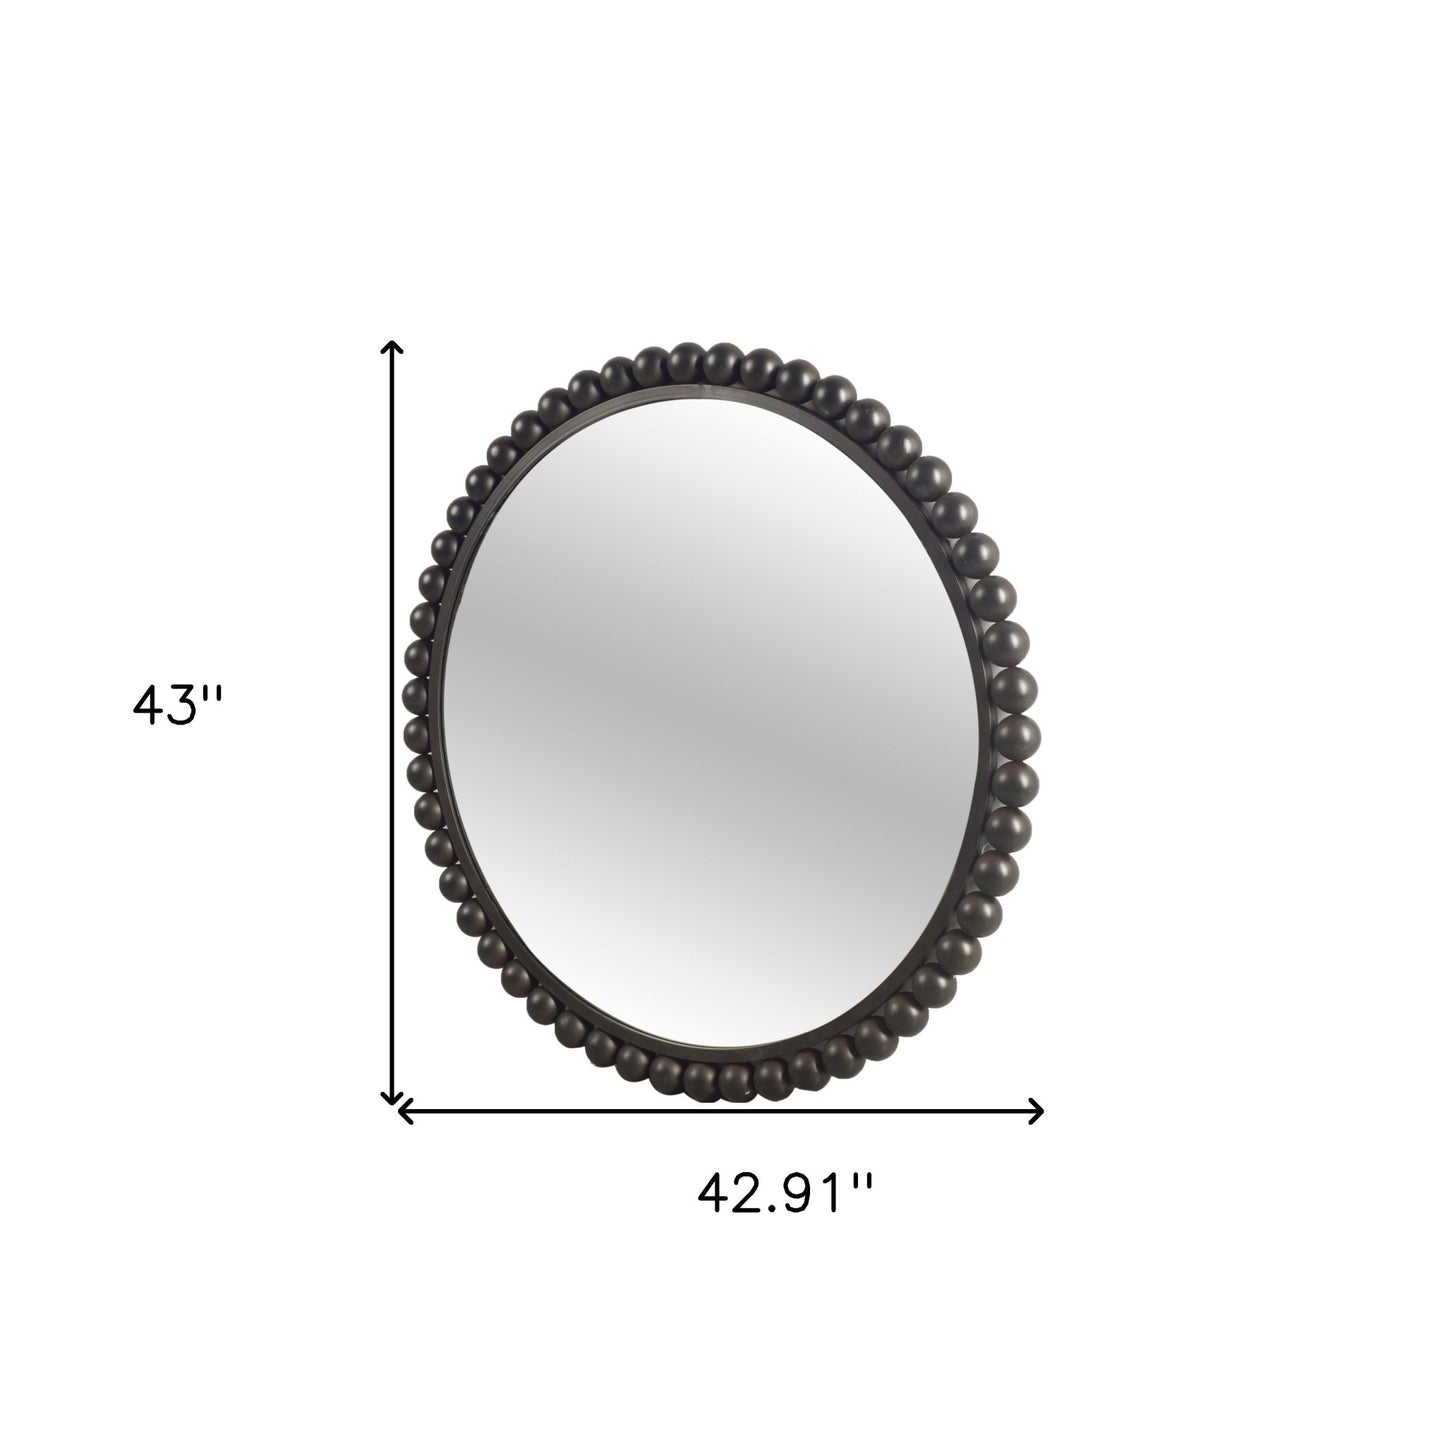 43" Round Black Metal Ball Frame Wall Mirror